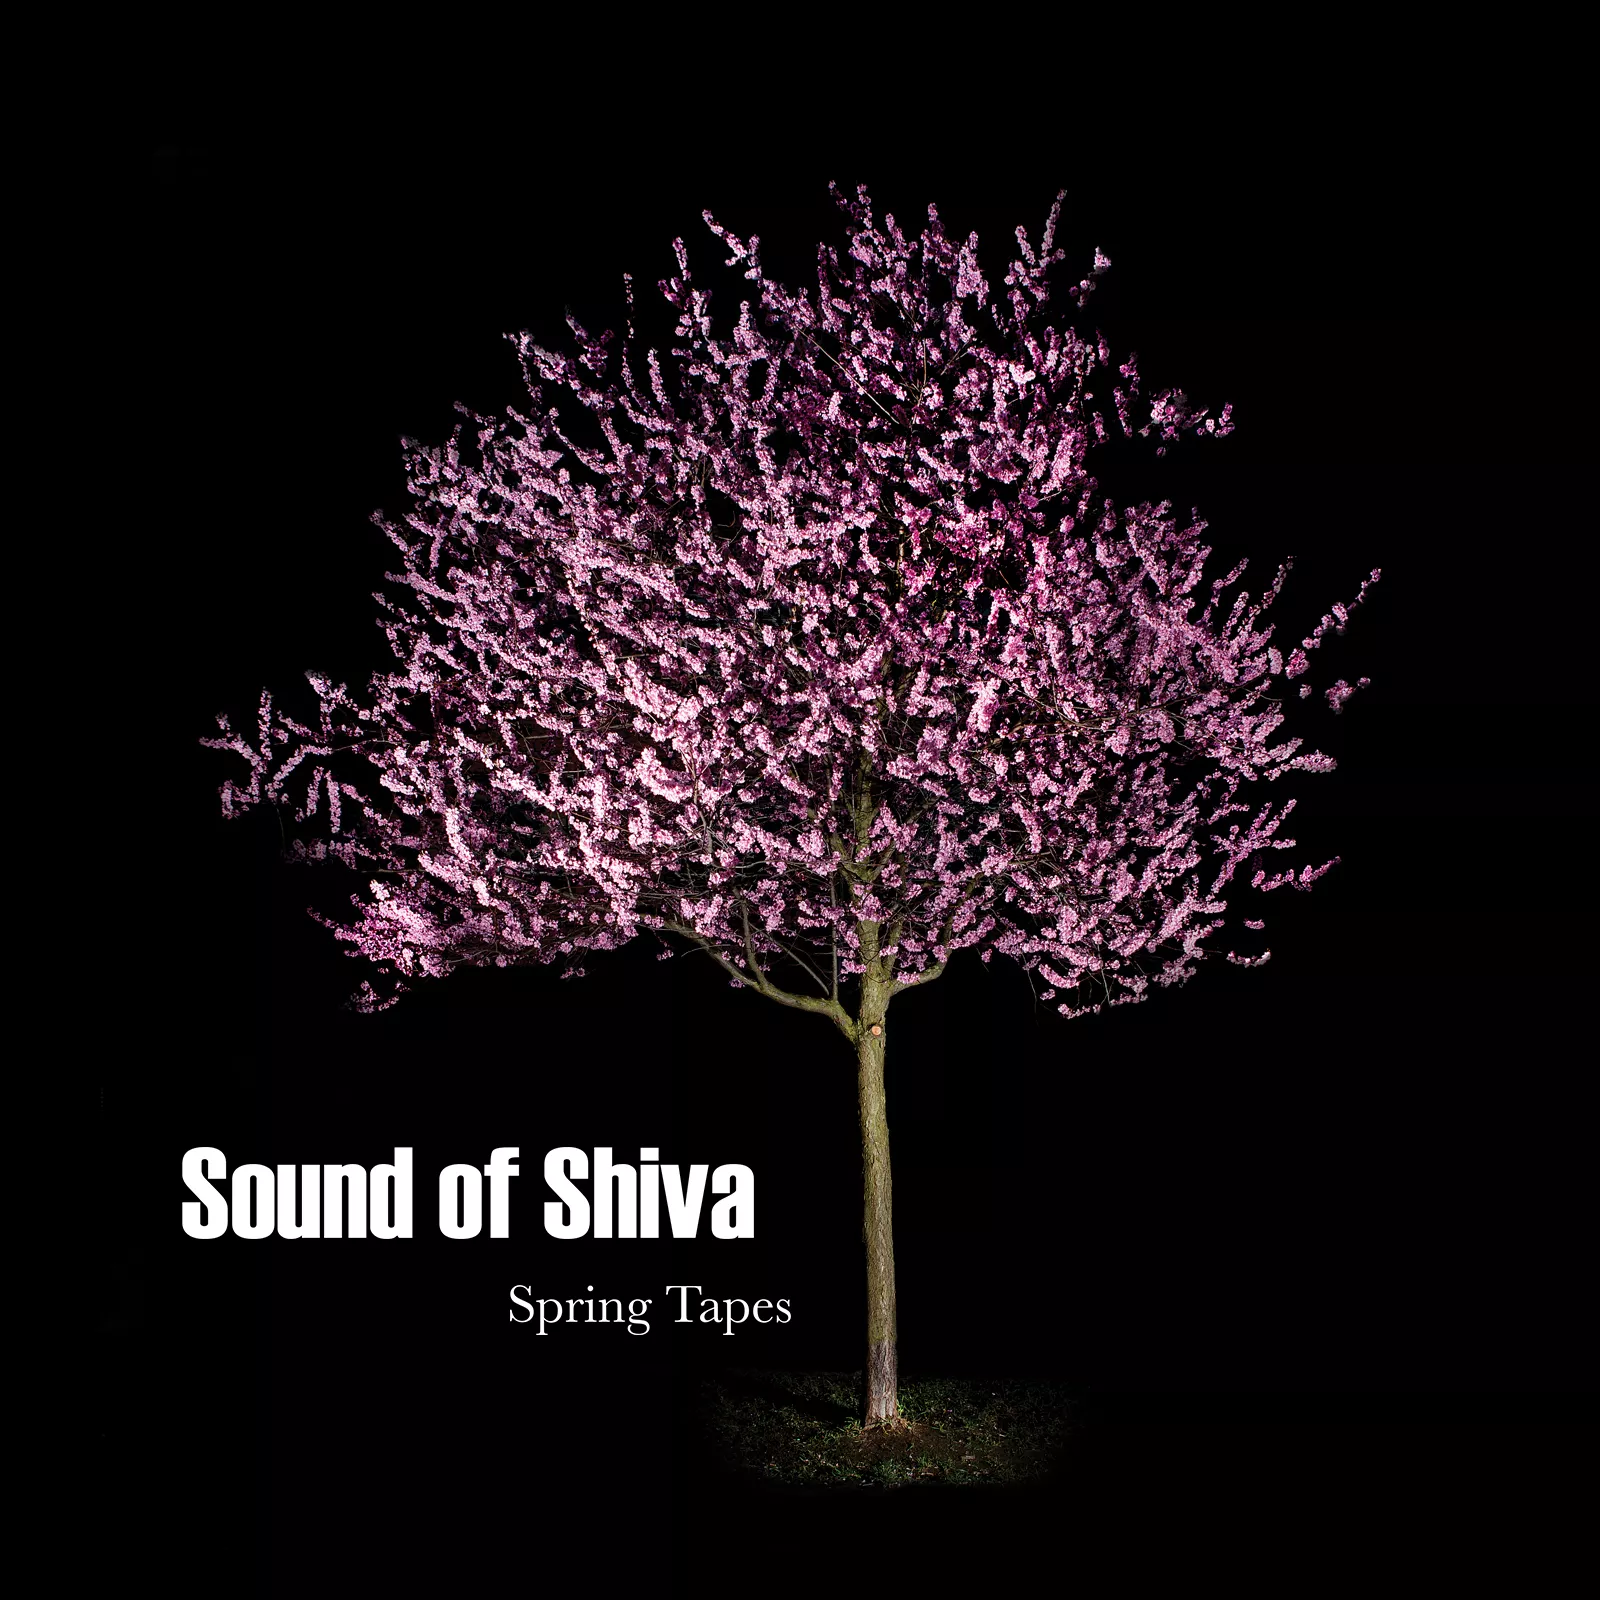 Spring Tapes - Sound of Shiva